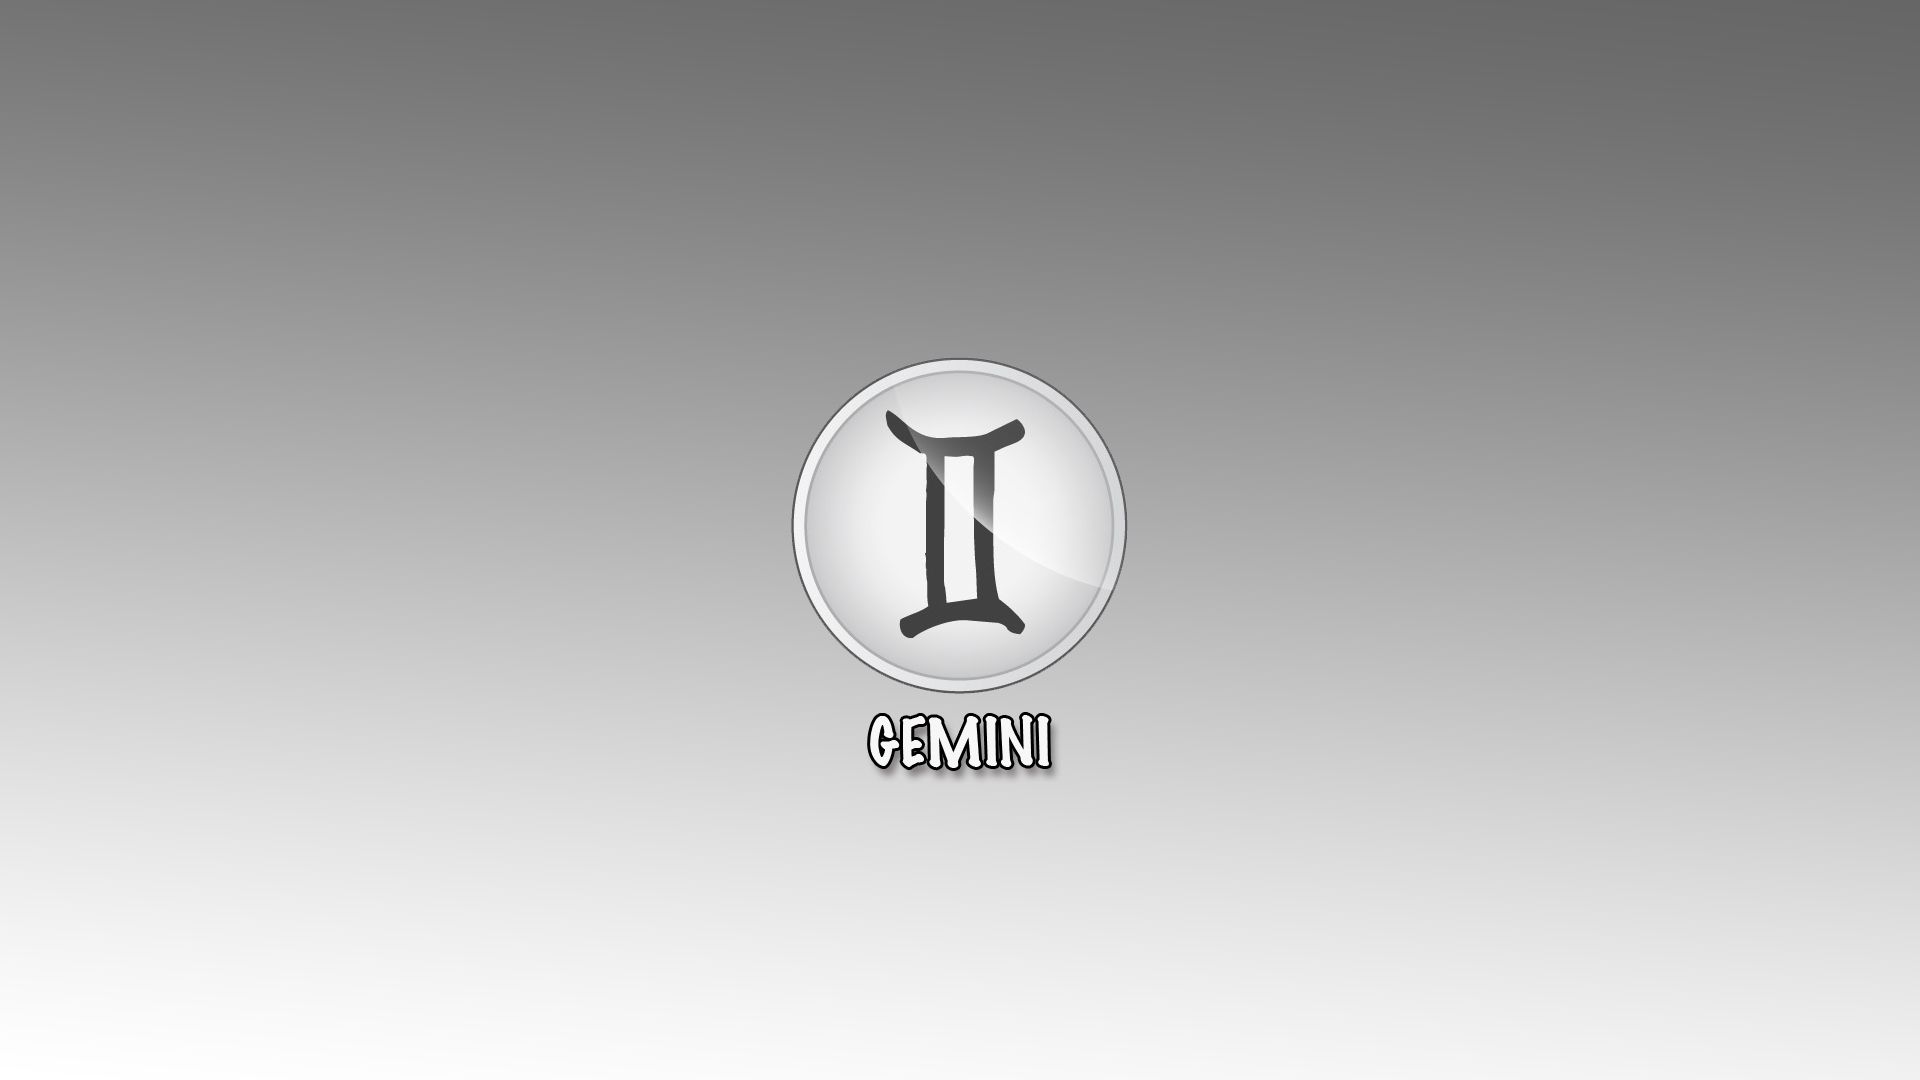 Gemini sign on a gray background Desktop wallpaper 1920x1080